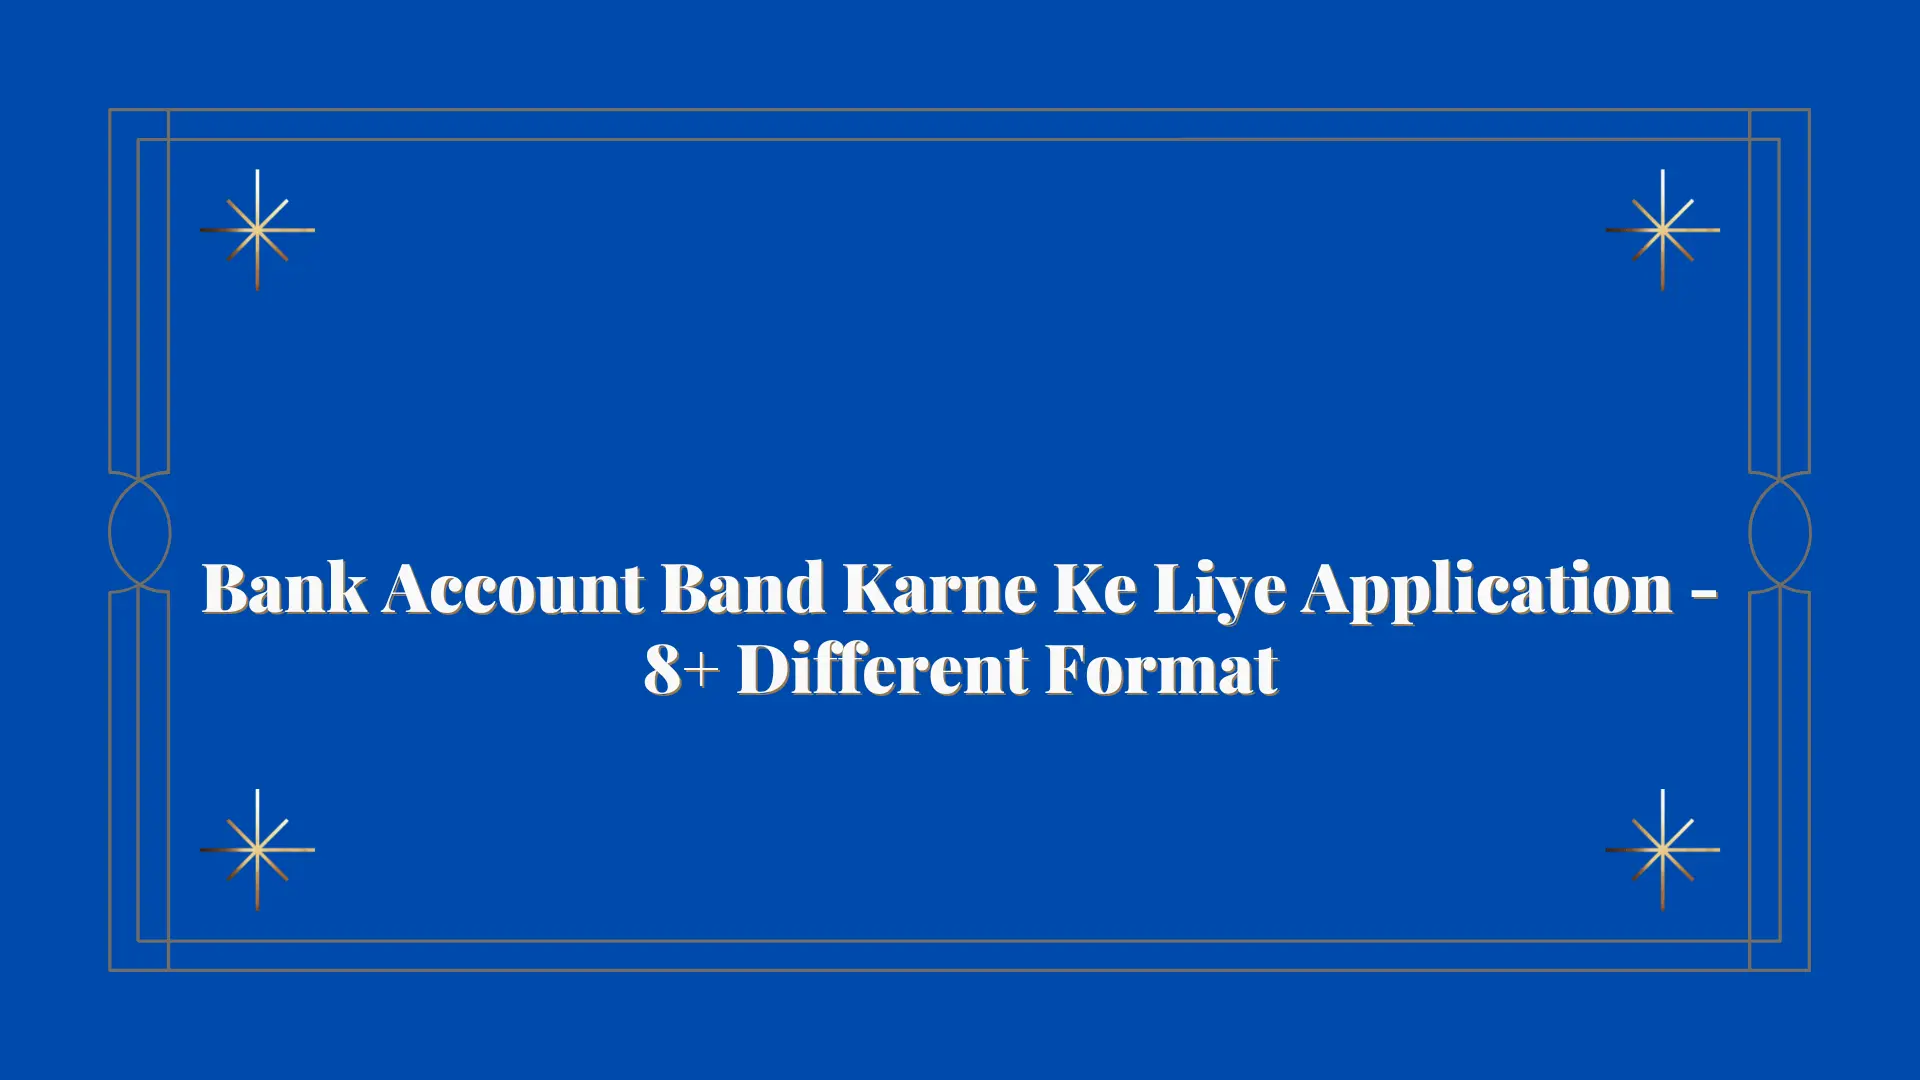 Bank Account Band Karne Ke Liye Applications